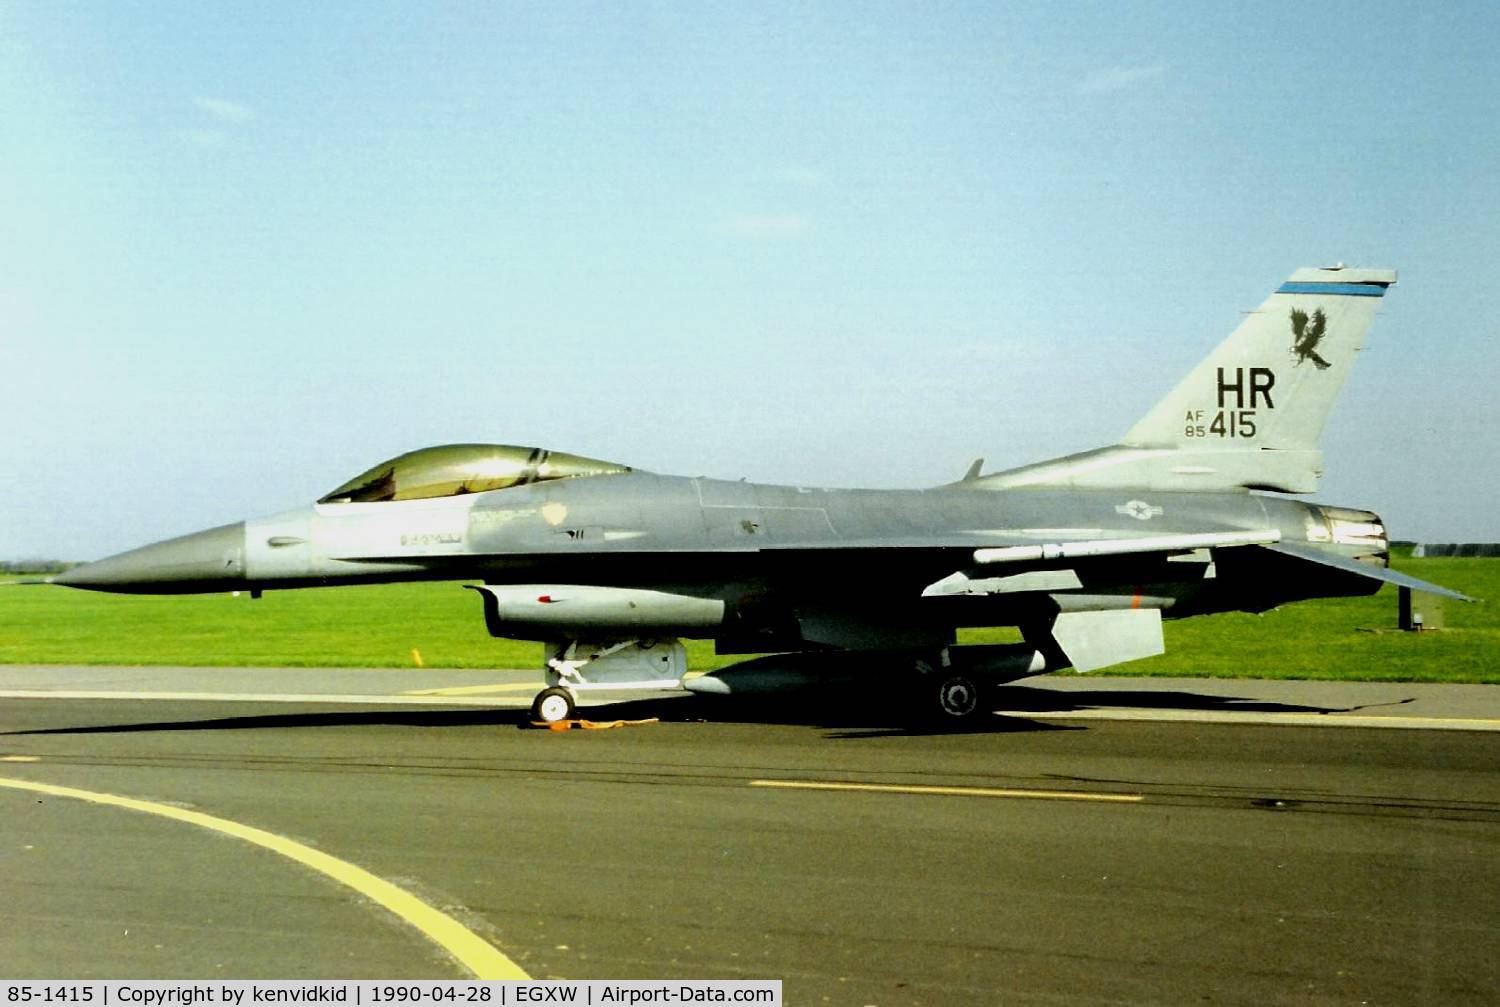 85-1415, 1985 General Dynamics F-16C Fighting Falcon C/N 5C-195, At the Waddington 1990 photocall.